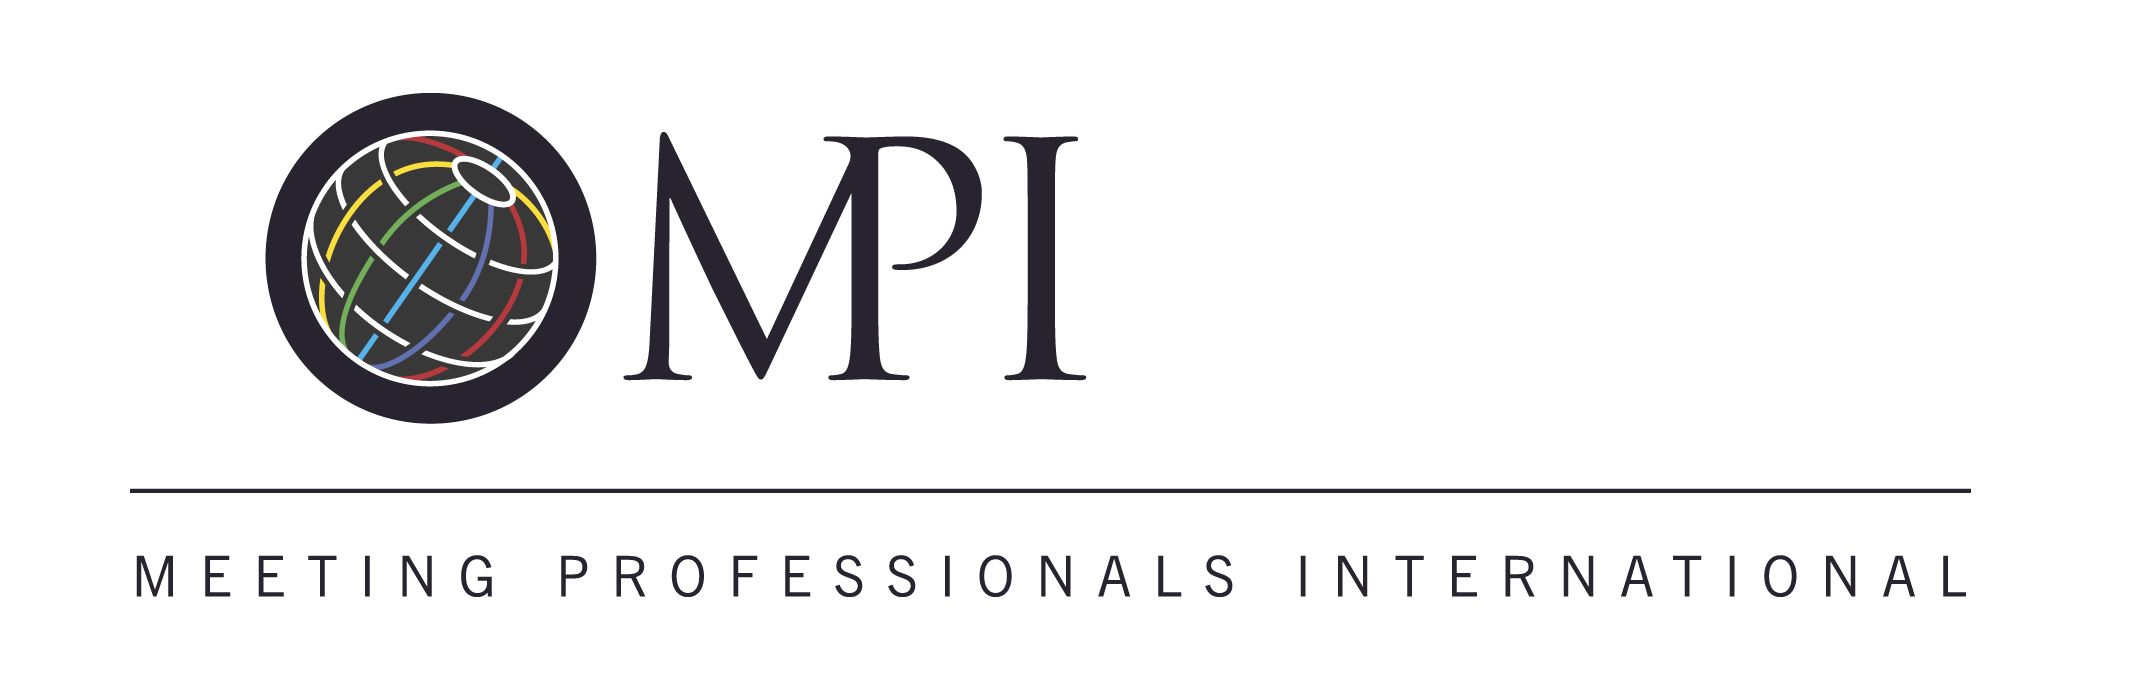 MPI Logo - MPI LOGO - Meetings and Conventions PEI